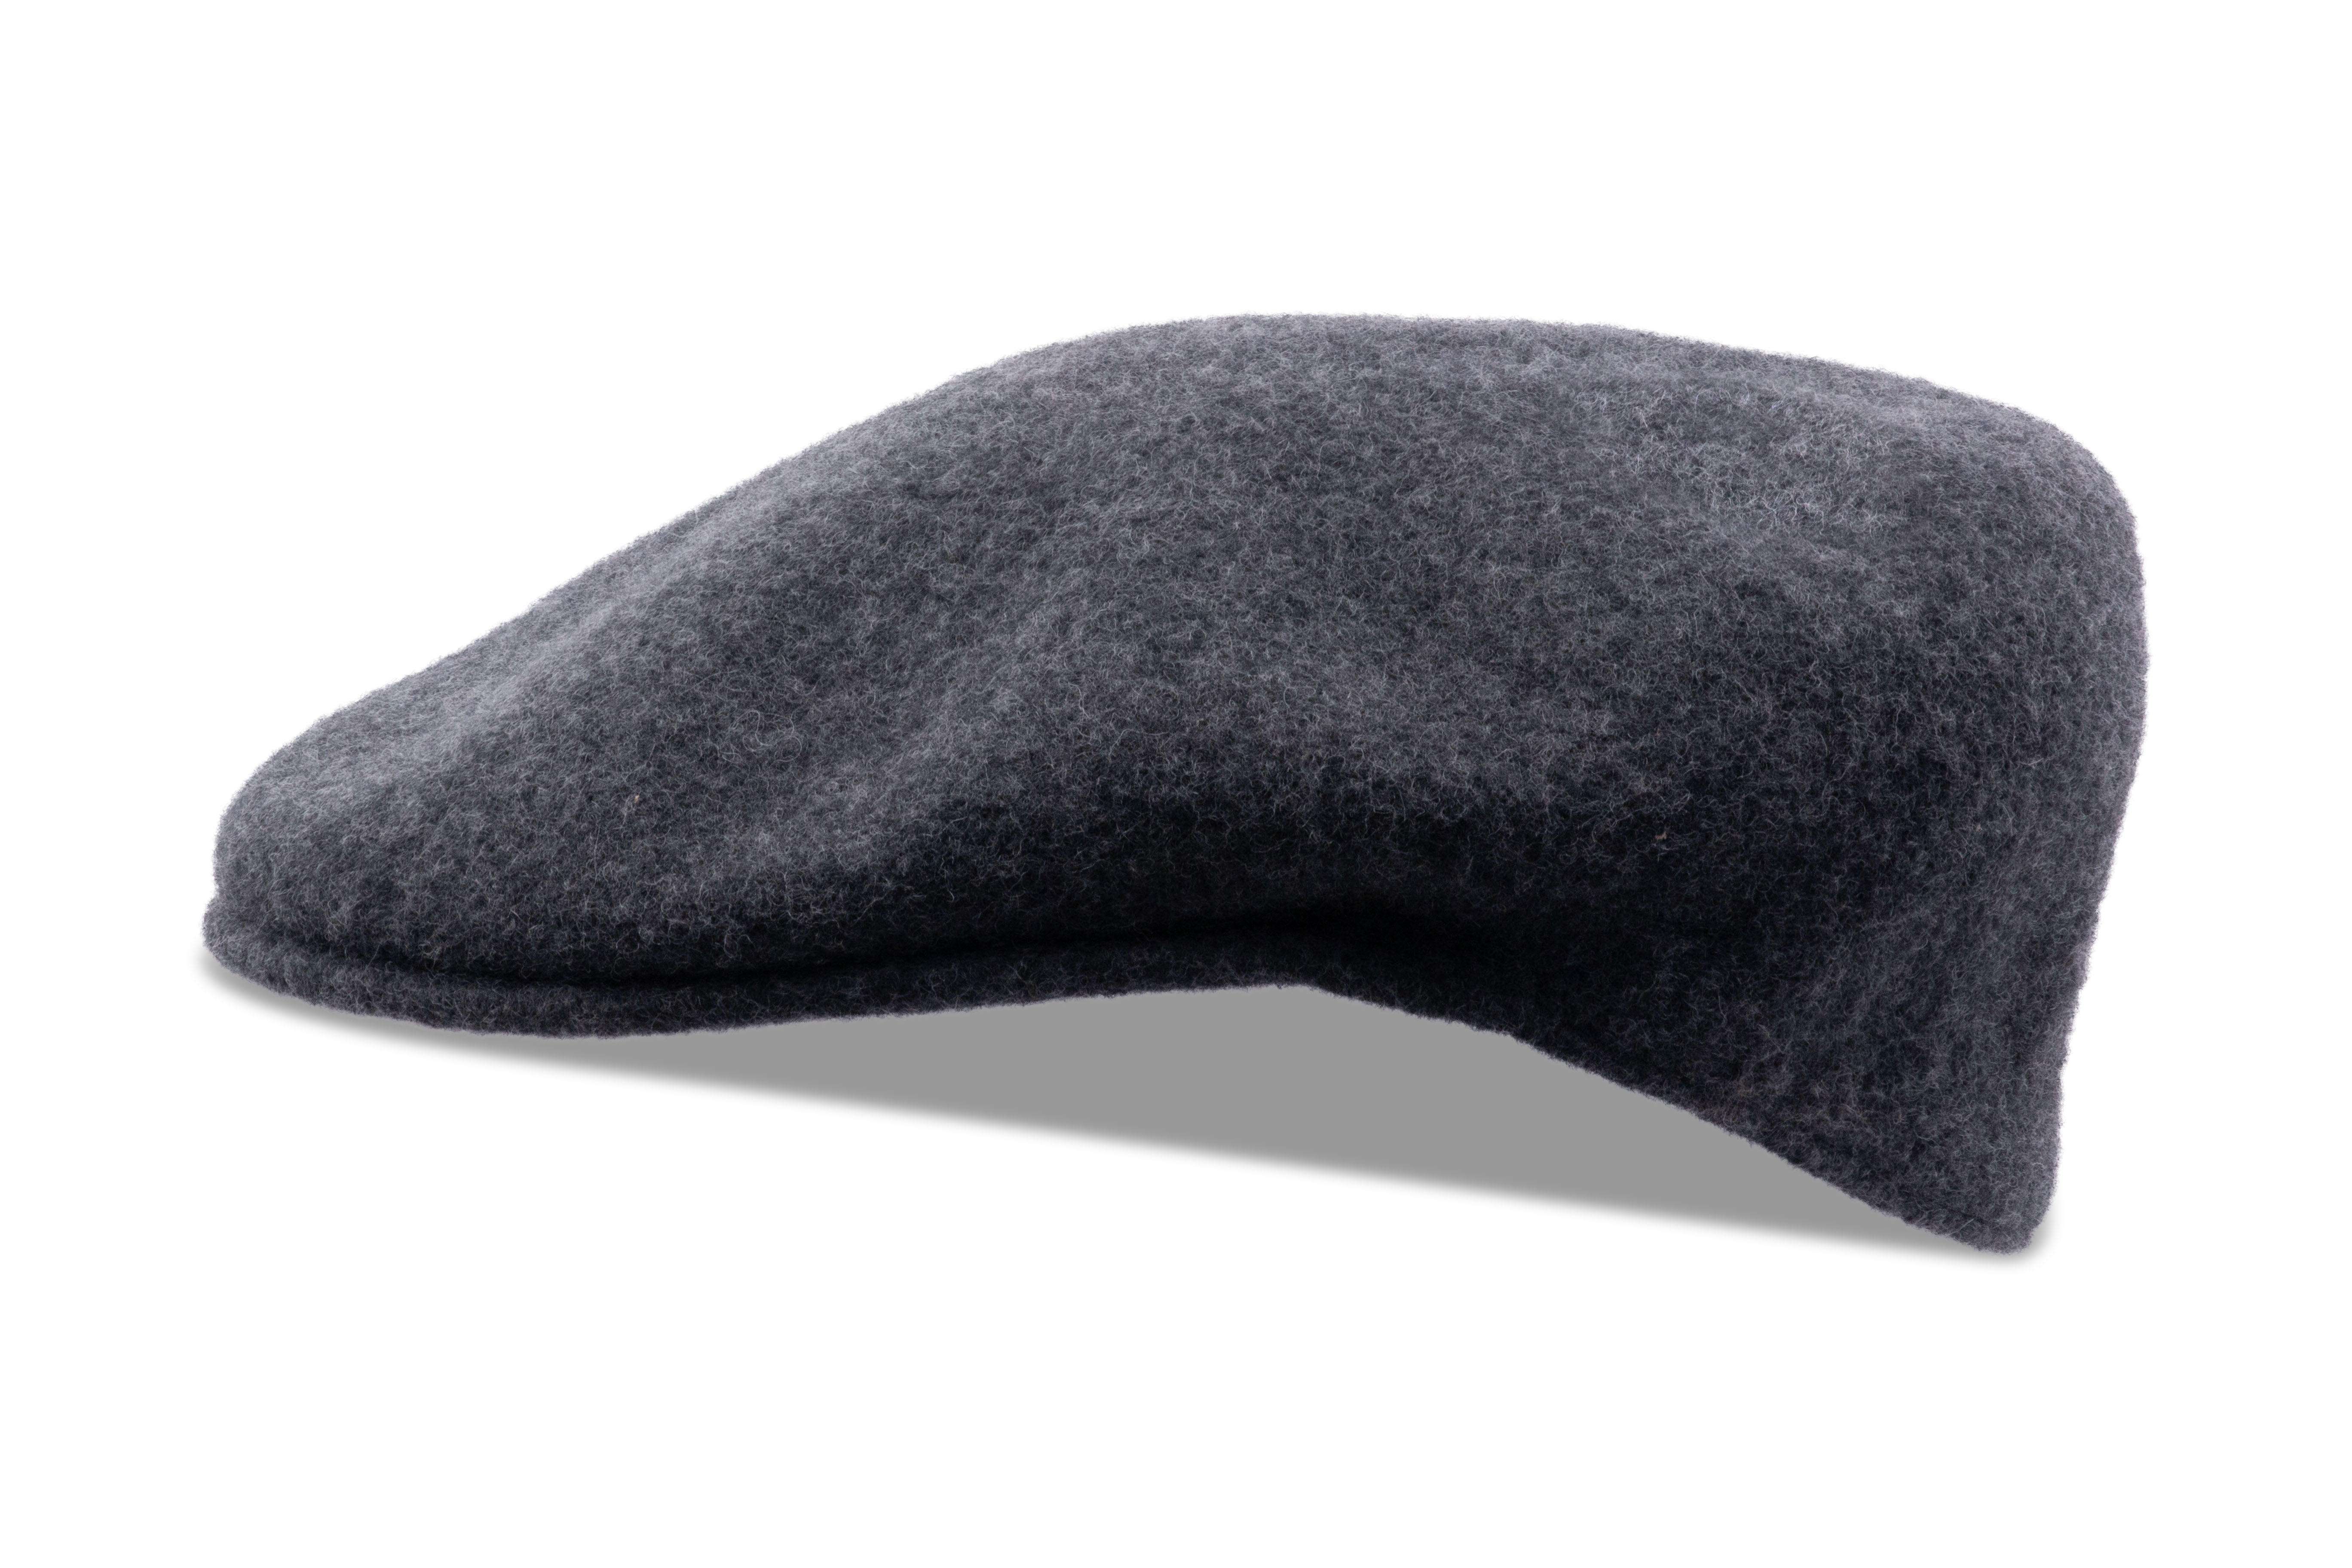 Kangol 504 Wool Felt Hat for Men and Women - Dark Flannel - L